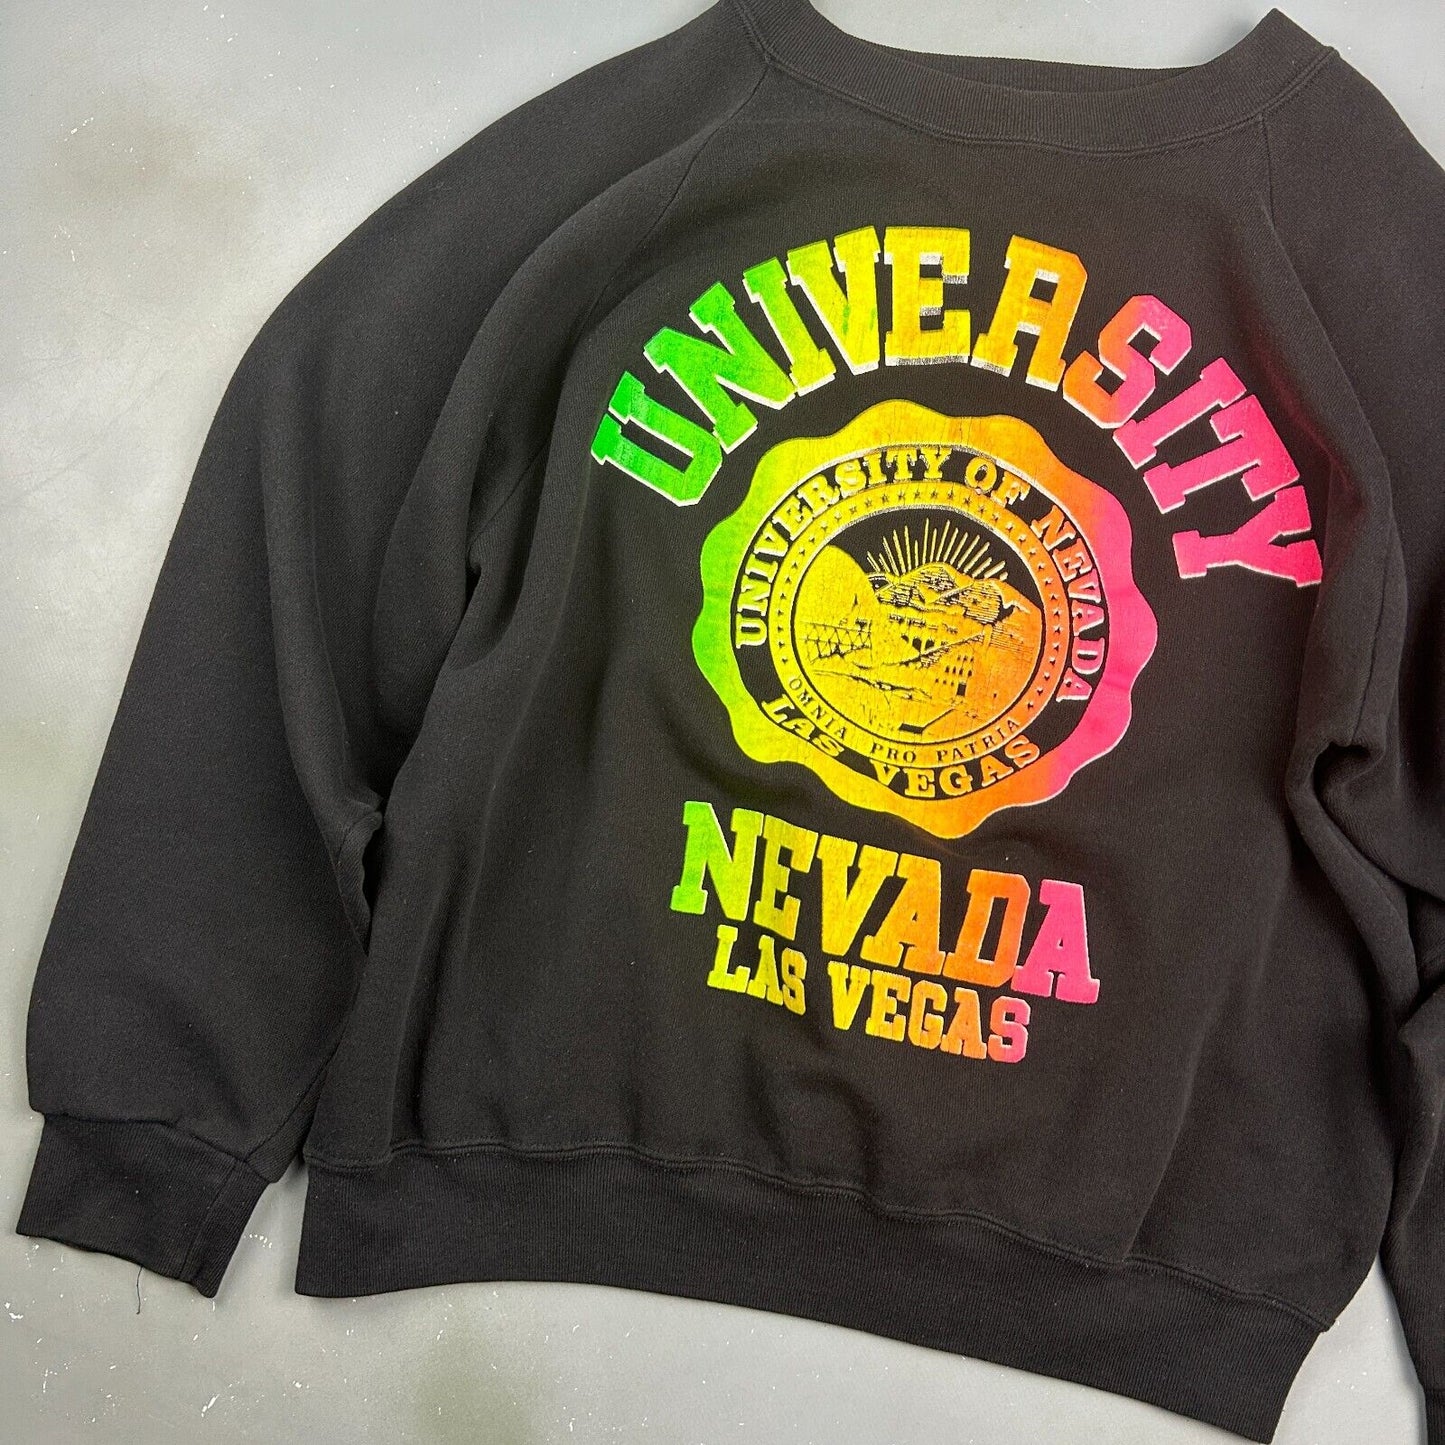 VINTAGE 90s | University Nevada Las Vegas Gradient Crewneck Sweater sz L Adult